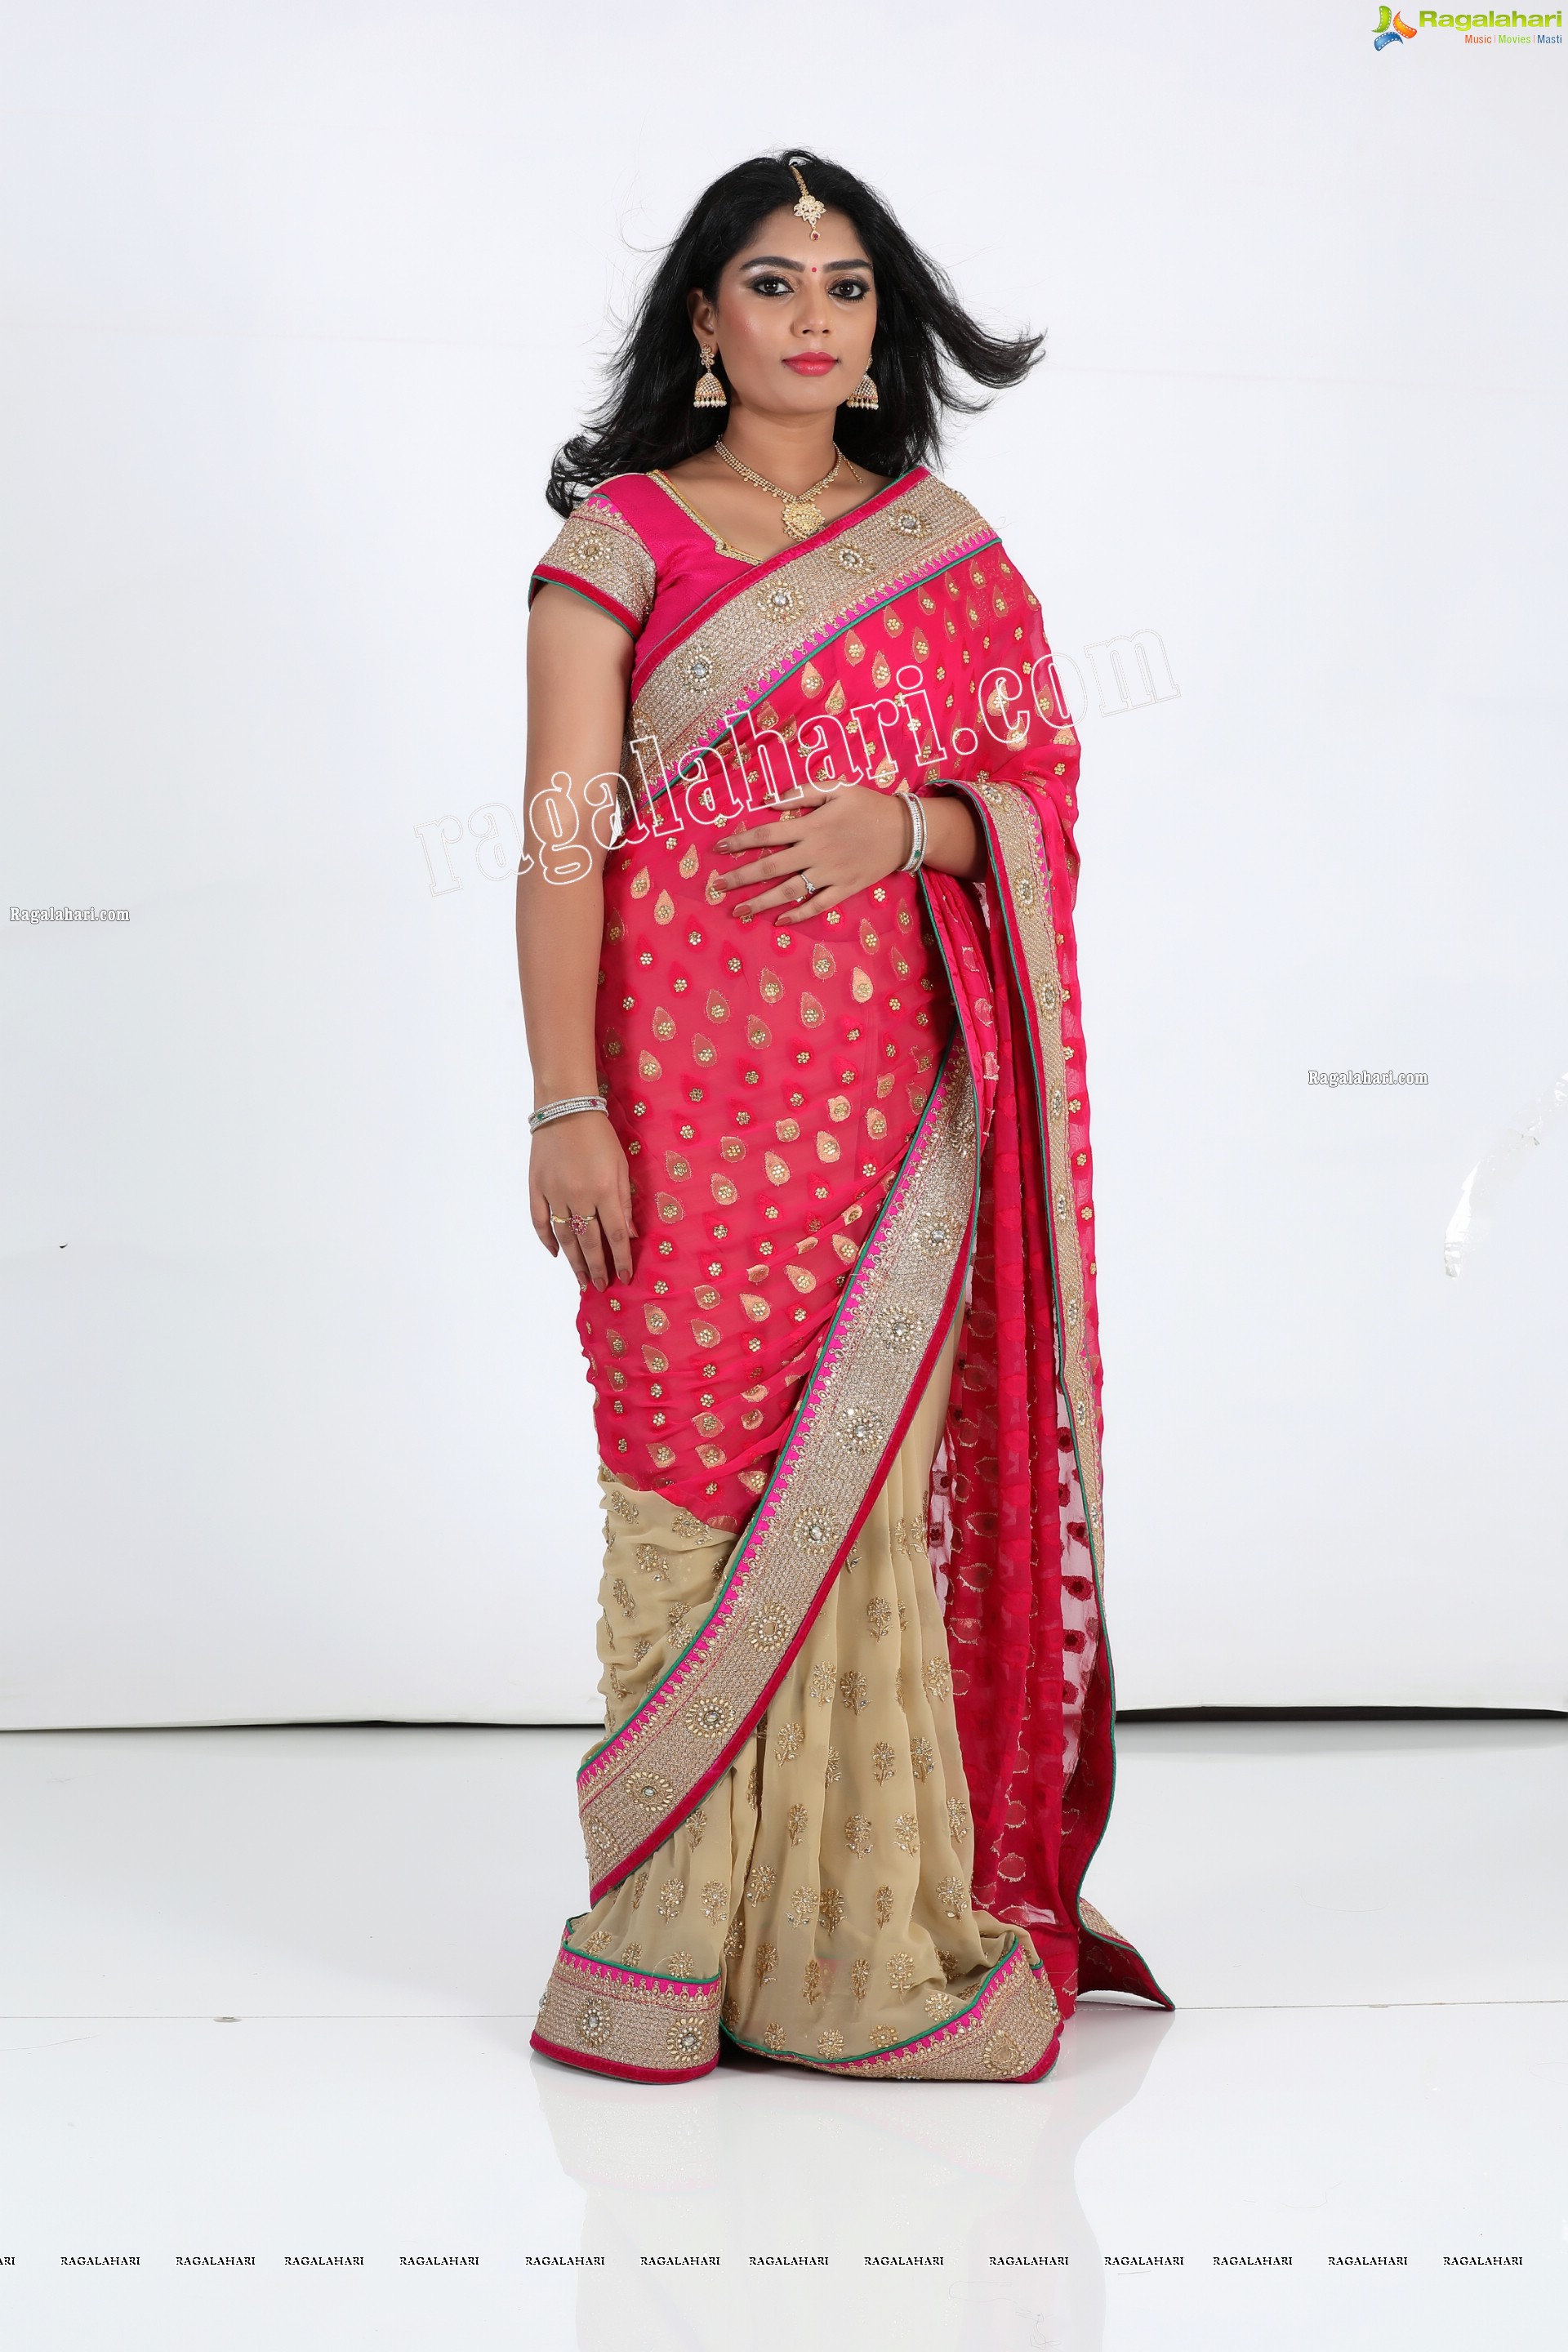 Lasya Sri in Pink and Cream Designer Saree, Exclusive Photo Shoot